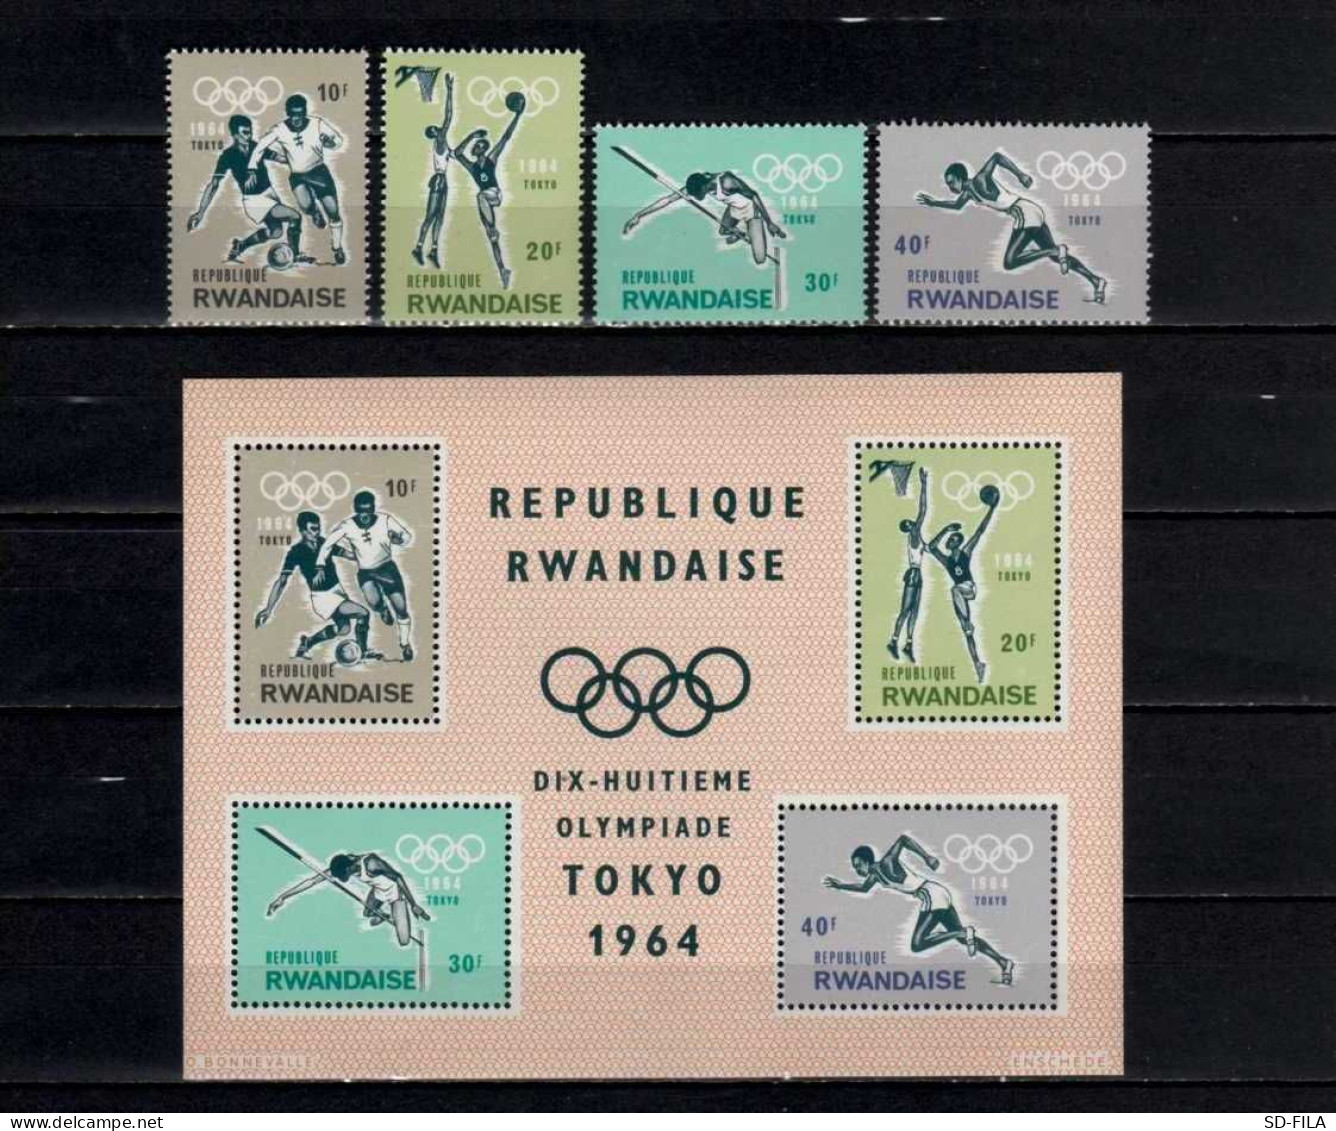 Belgian Congo - Rwanda 1964 N° 81A/82C + BL2 MNH Olympic Games - Jeux Olympique Tokio - Japan C15.00Eu. - Unused Stamps